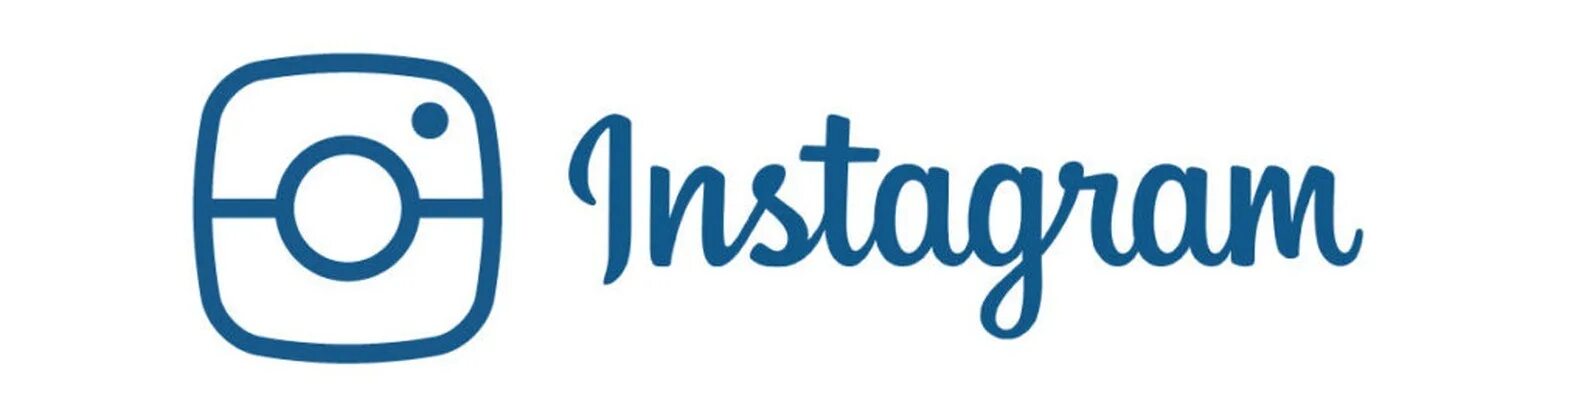 Надпись инстаграмм. Инстаграм надпись. Надпись для инстаграмма. Надпись Инстаграм на прозрачном фоне. Instagram text logo.